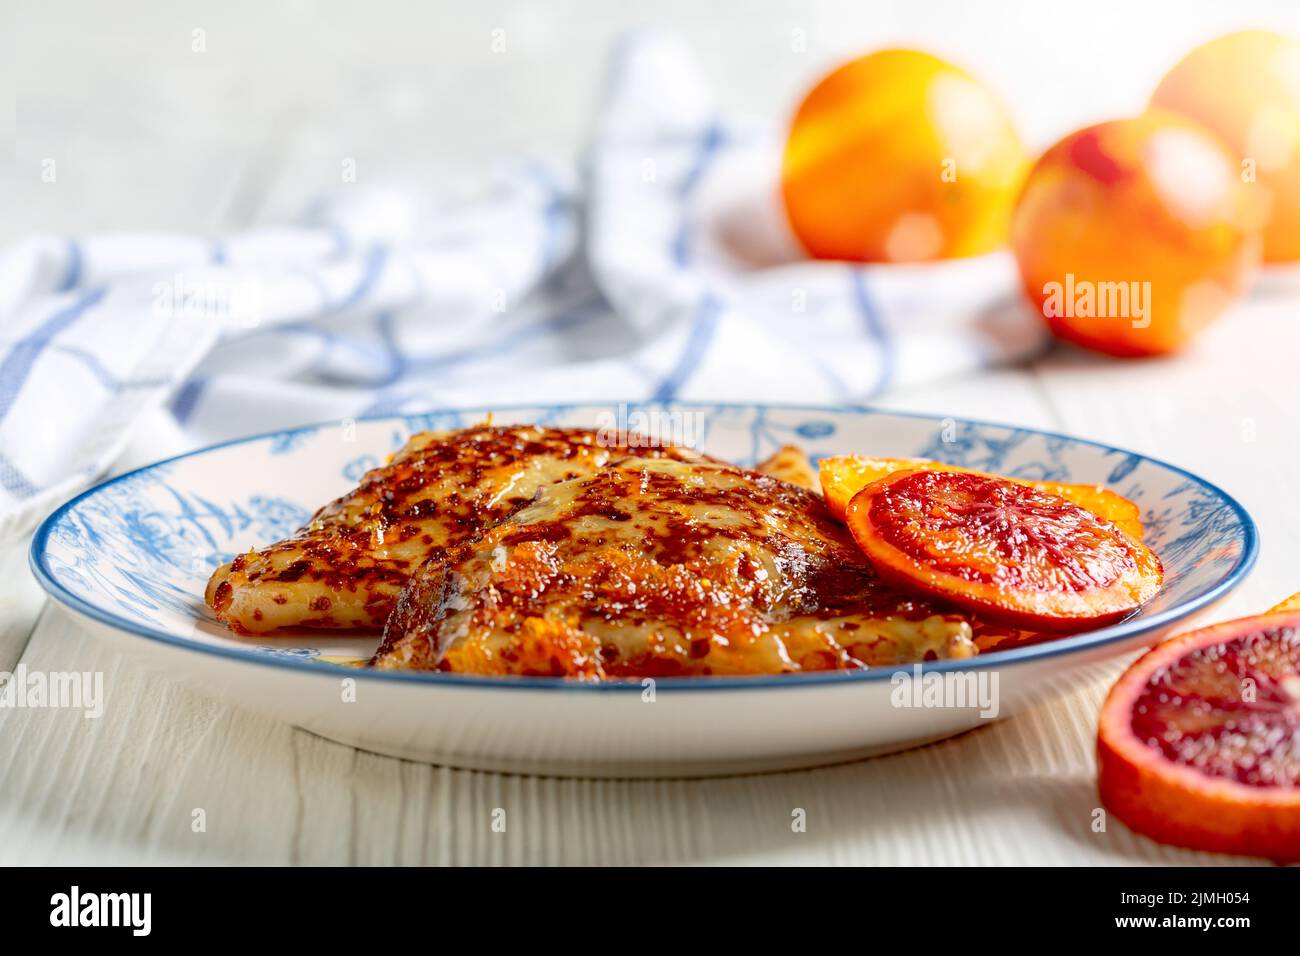 Homemade French pancakes with orange sauce. Stock Photo